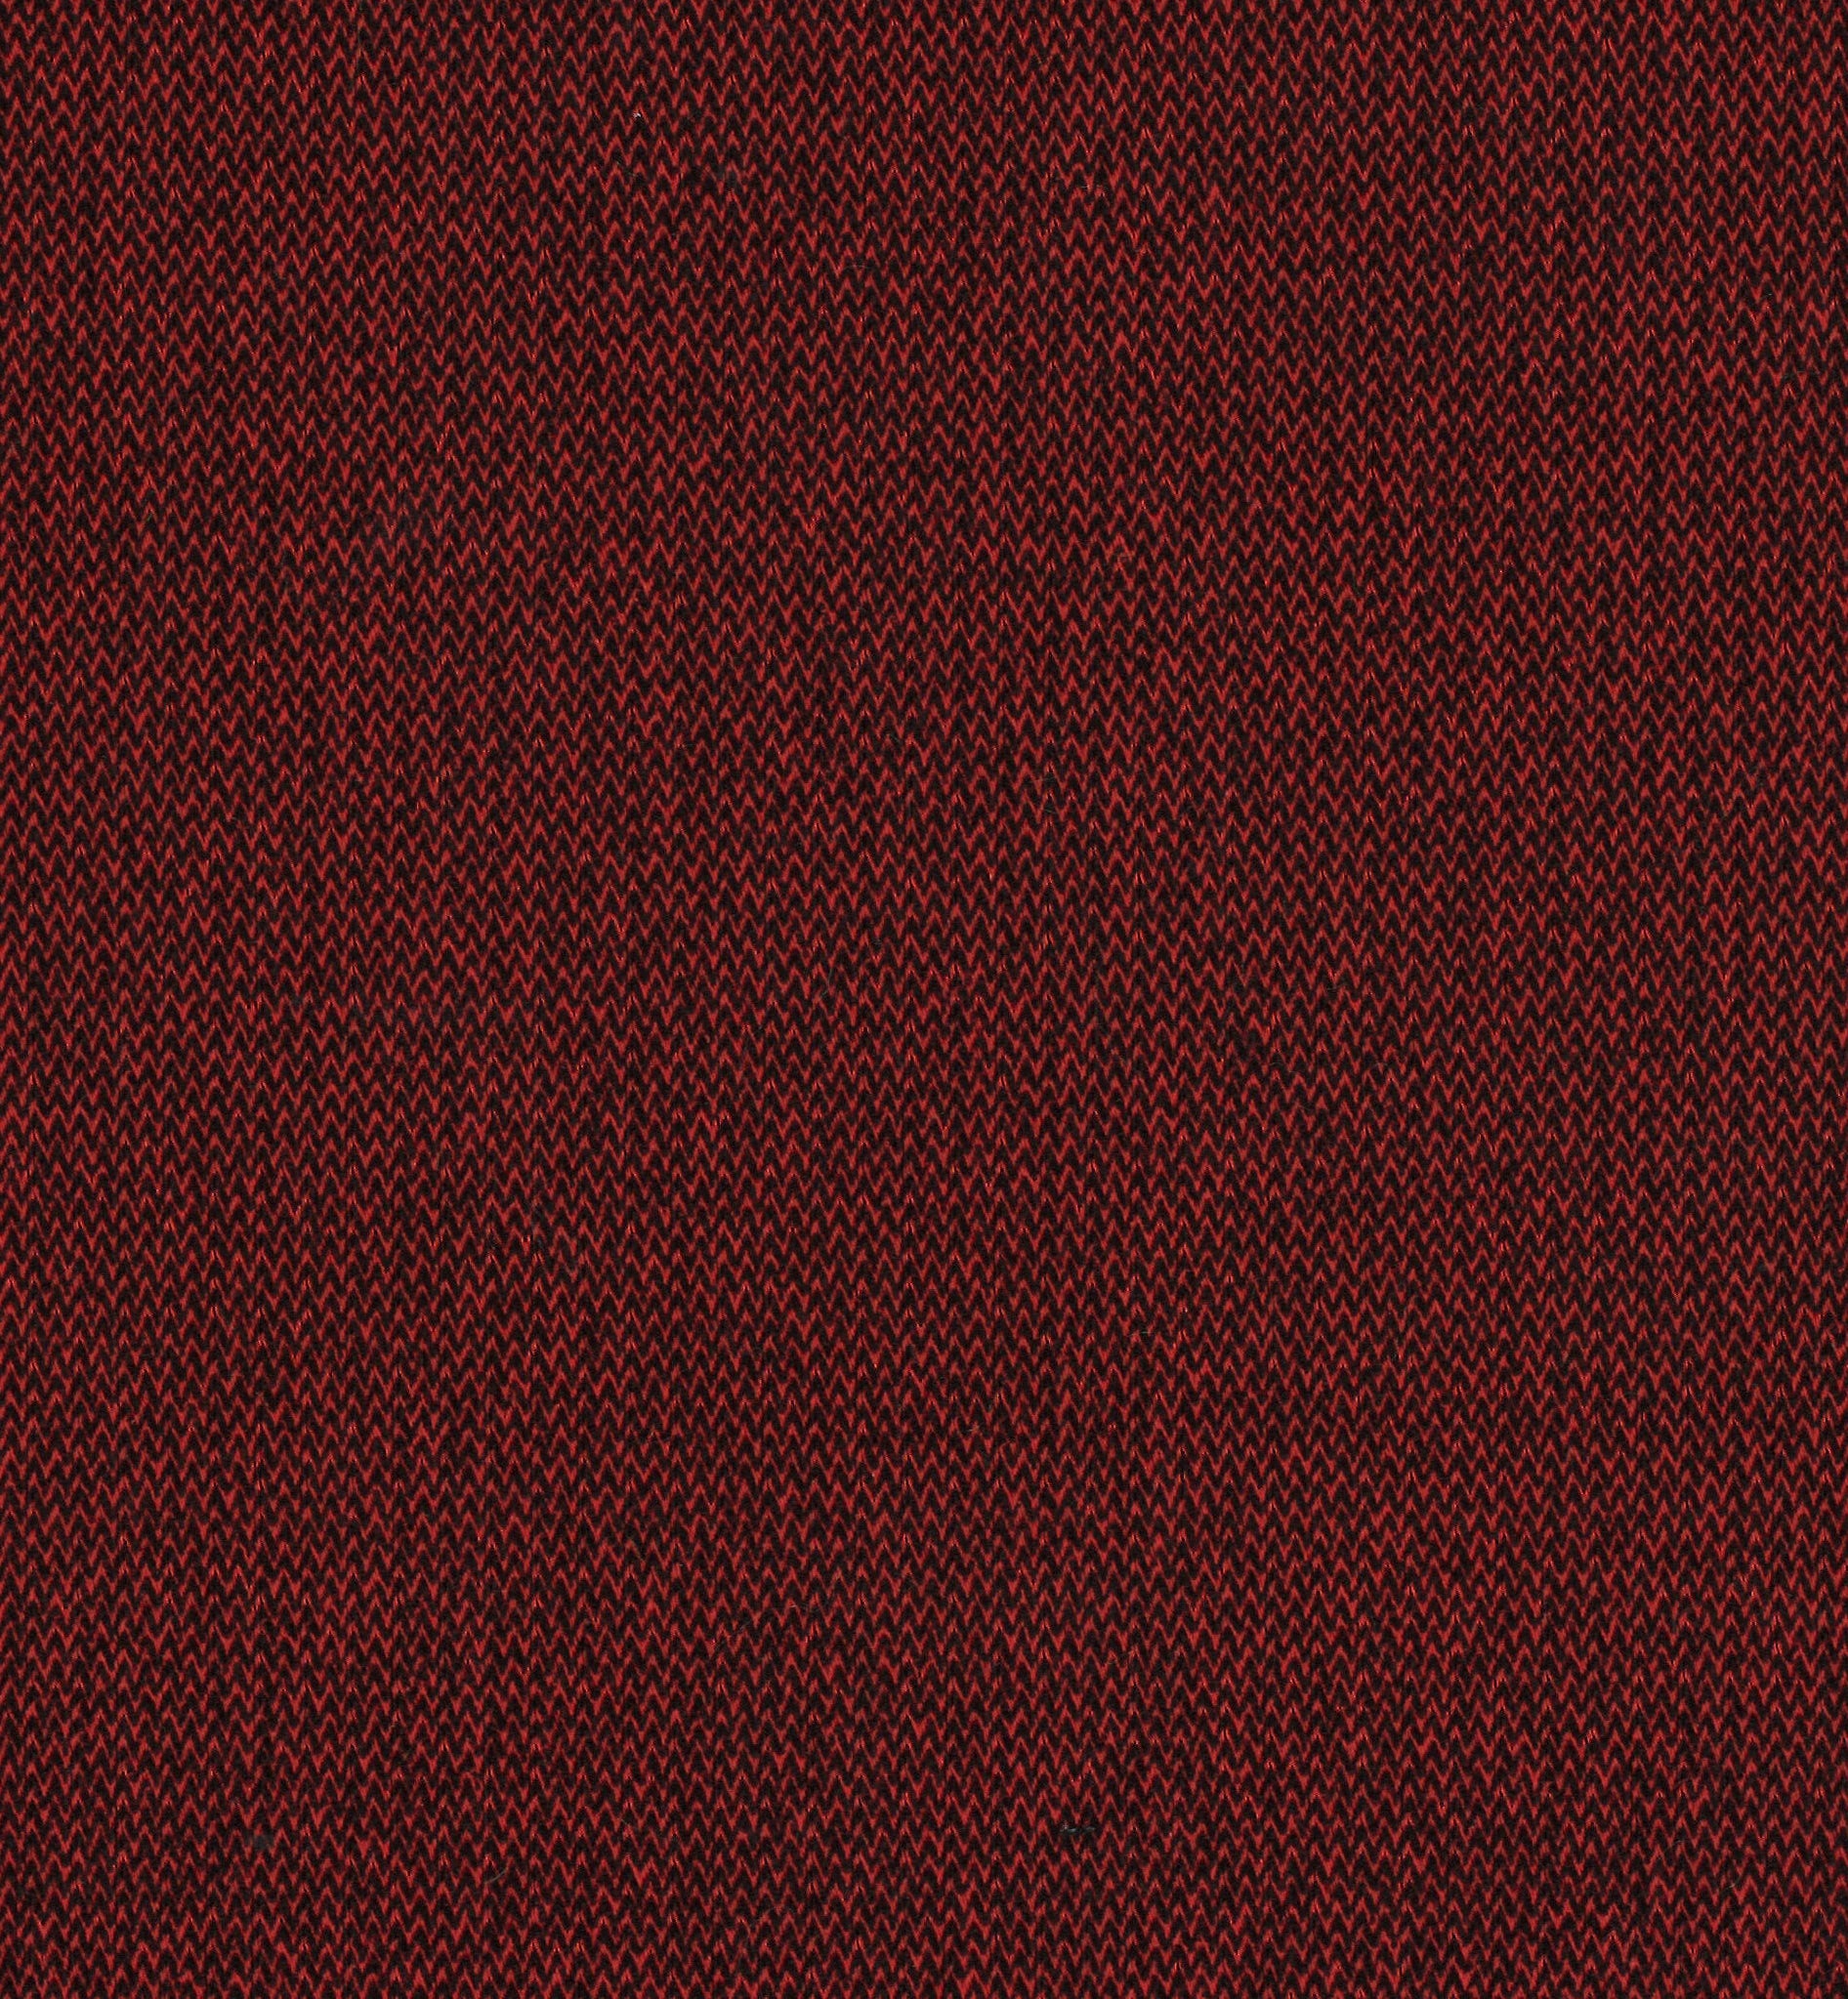 33002-01 Red Woven ZigZag Jacquard Blend 295g/yd 55&quot; jacqaurd polyester red spandex woven zigzag Jacquard, Solid Color - knit fabric - woven fabric - fabric company - fabric wholesale - fabric b2b - fabric factory - high quality fabric - hong kong fabric - fabric hk - acetate fabric - cotton fabric - linen fabric - metallic fabric - nylon fabric - polyester fabric - spandex fabric - chun wing hing - cwh hk - fabric worldwide ship - 針織布 - 梳織布 - 布料公司- 布料批發 - 香港布料 - 秦榮興